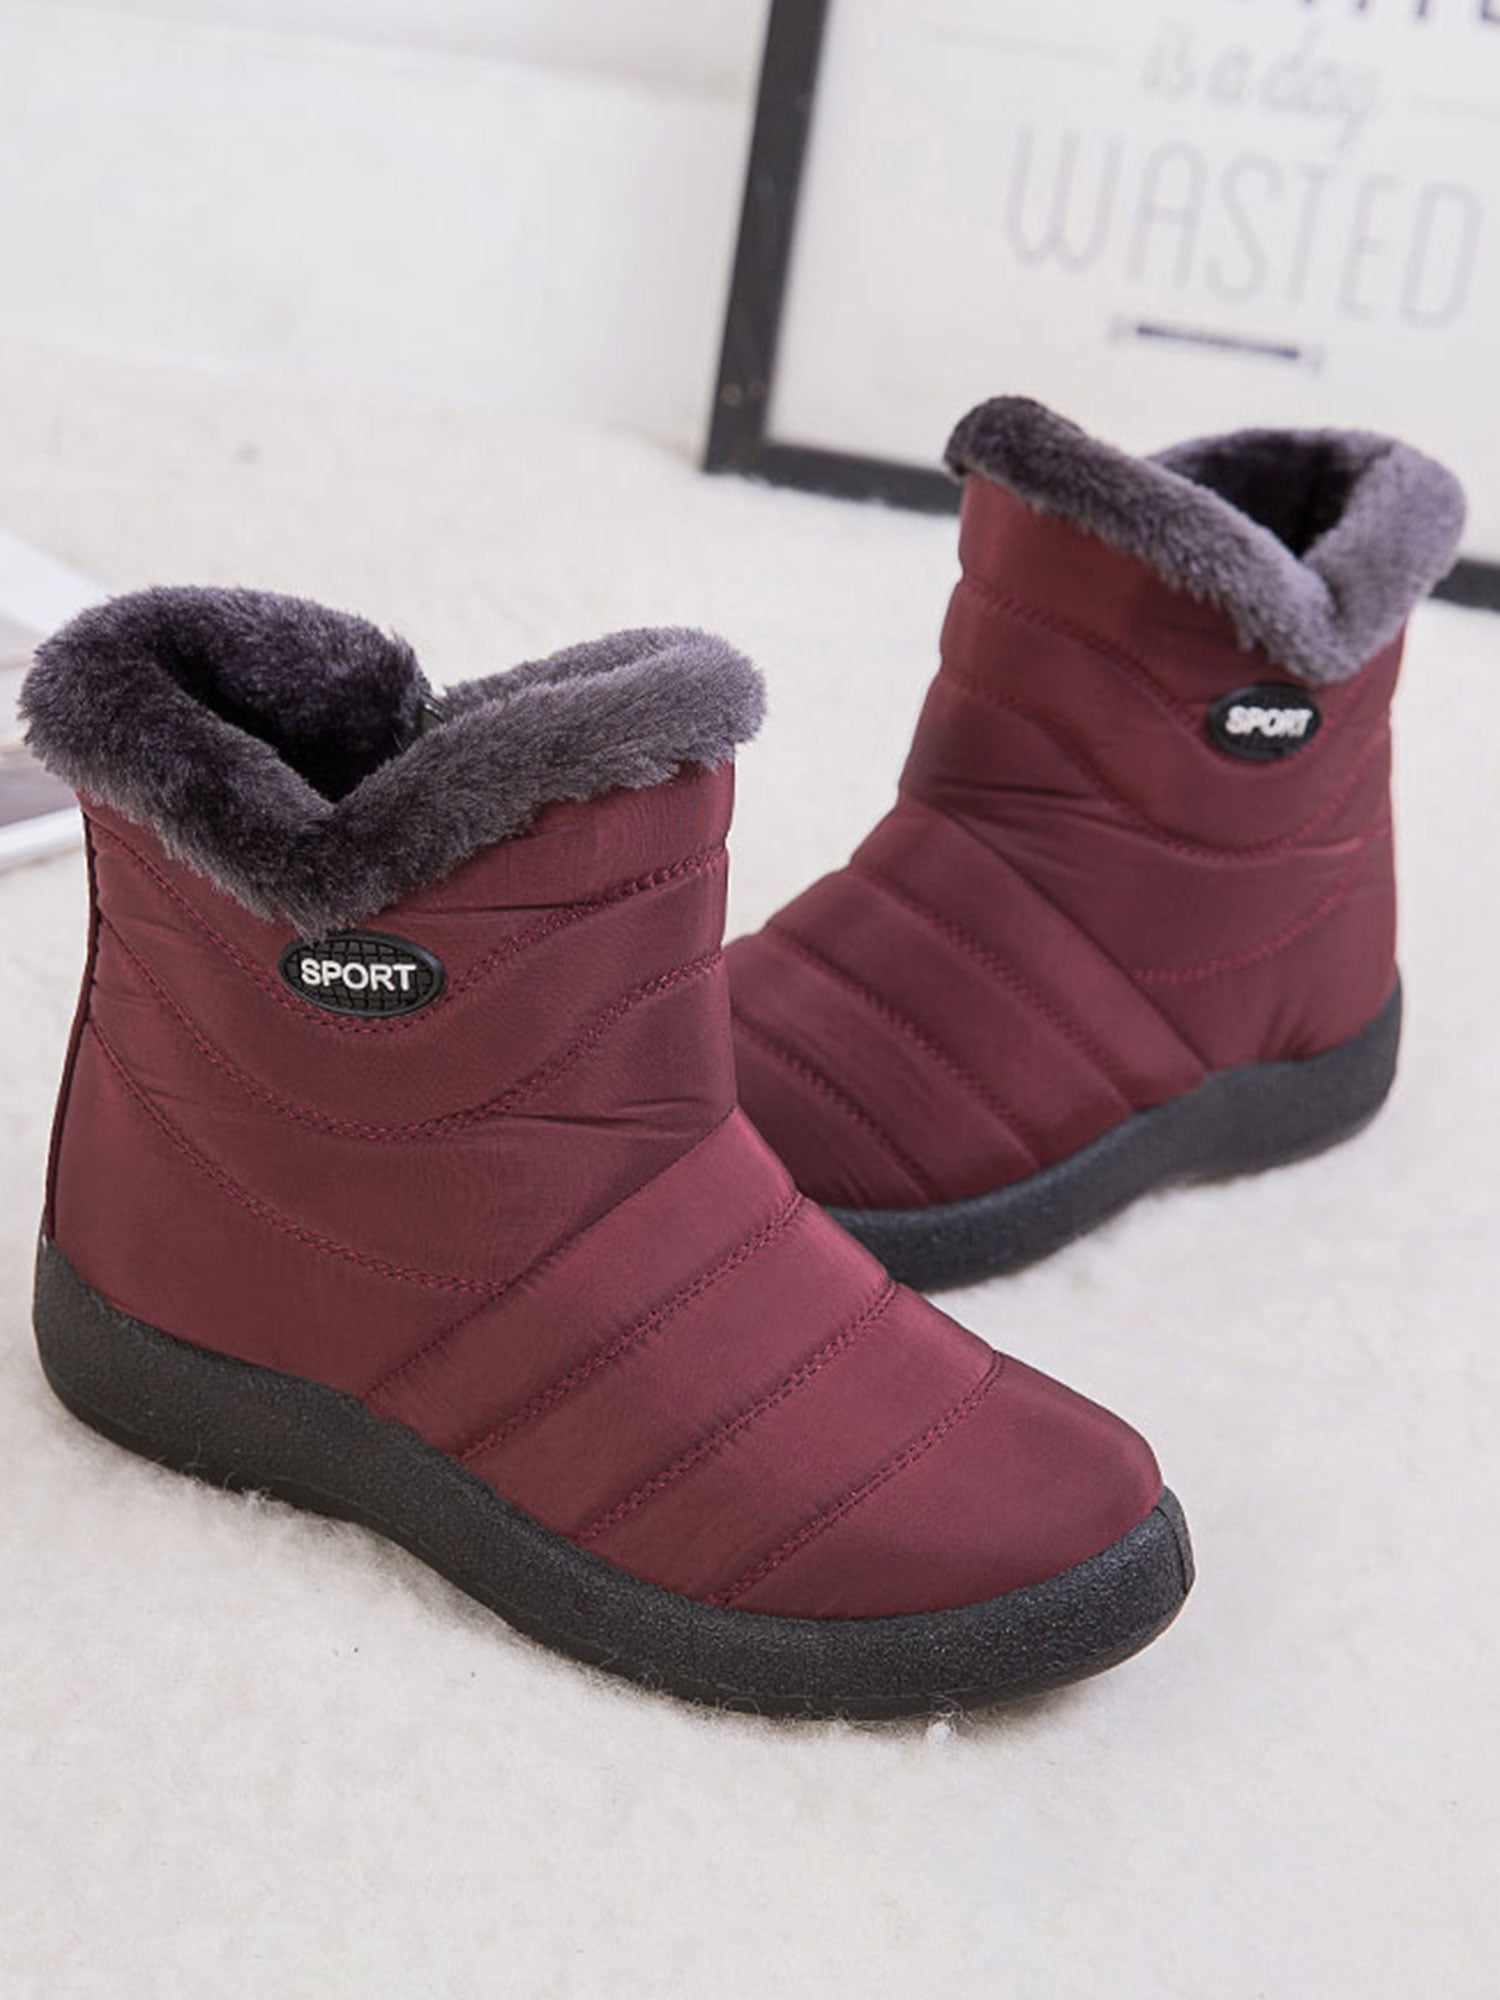 LUXUR Ladies Women's Waterproof Snow Boots Fur Lined Winter Warm